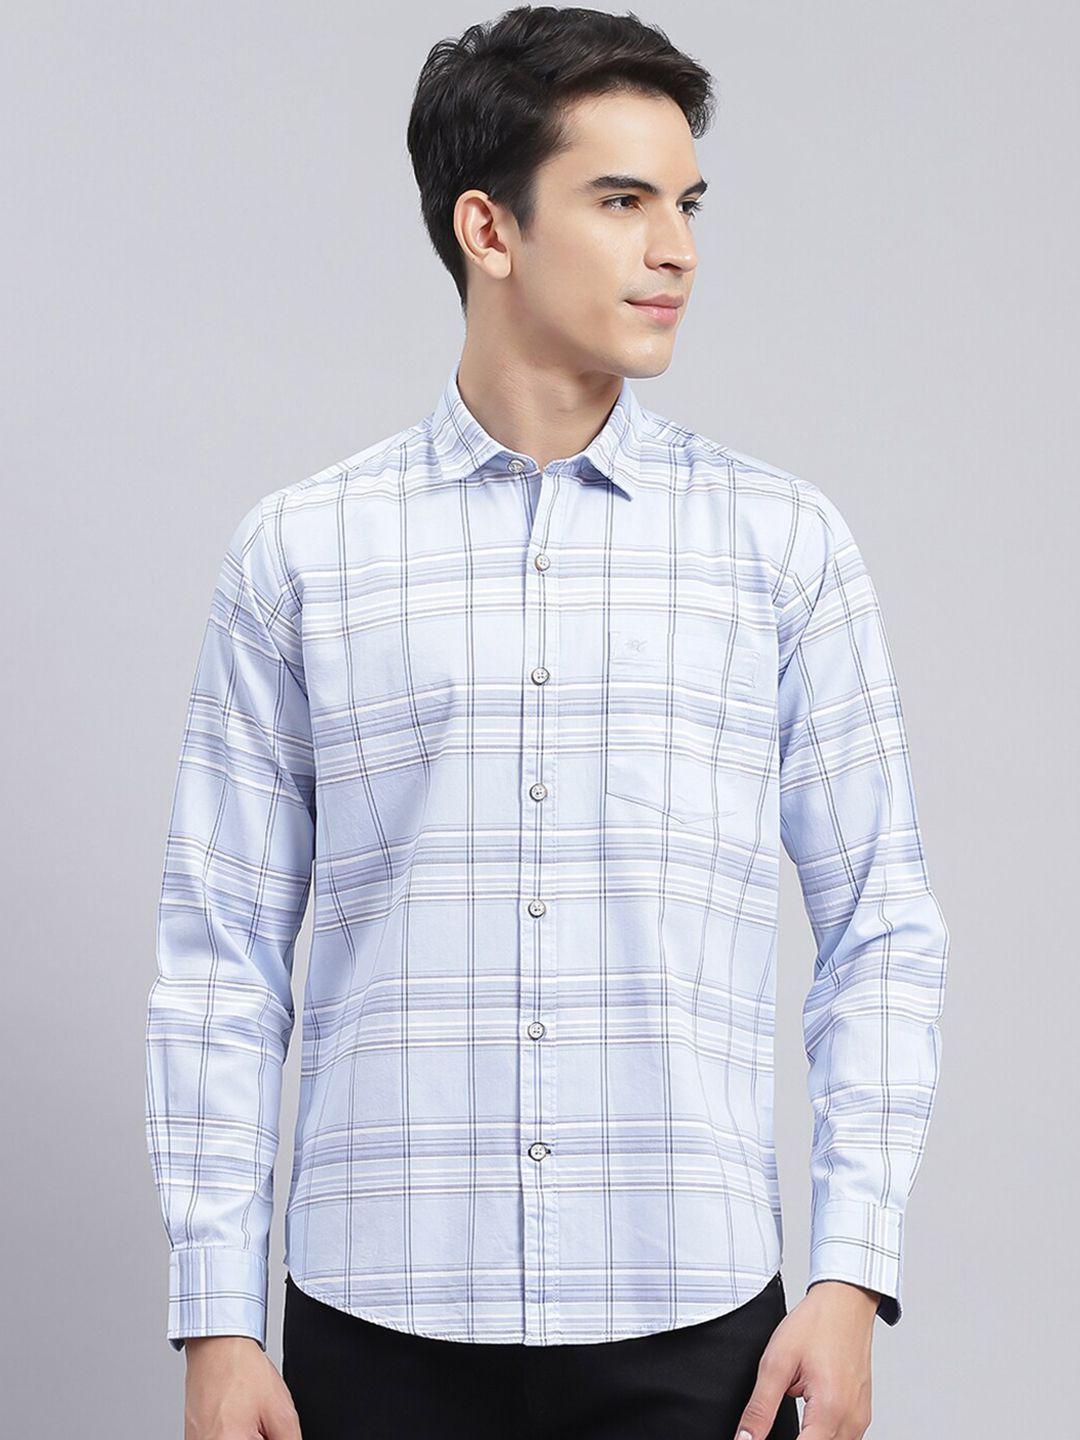 monte-carlo-classic-tartan-checked-opaque-pure-cotton-casual-shirt